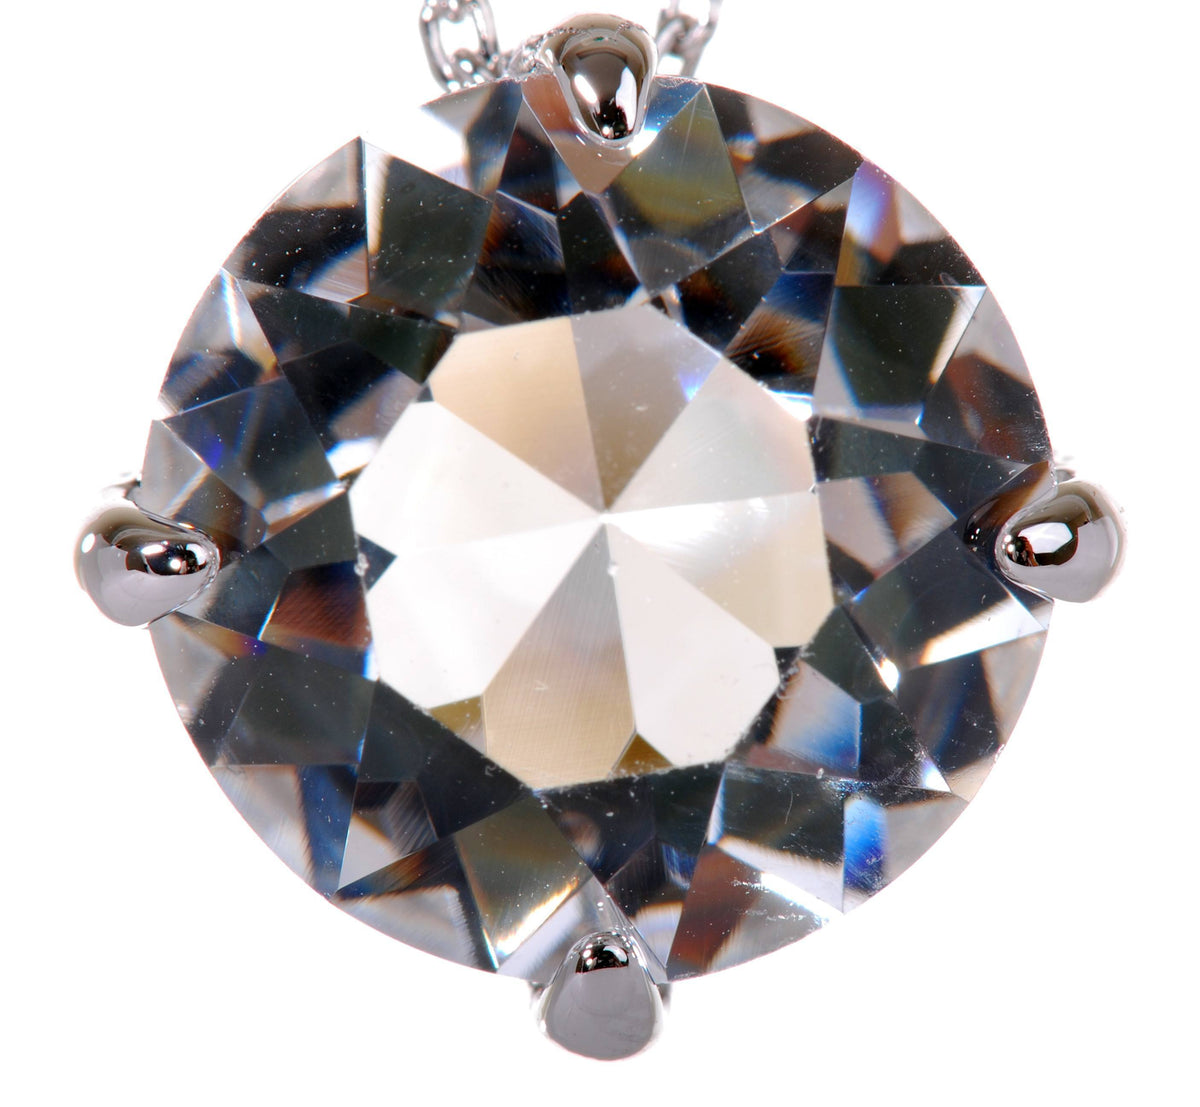 N7155 Rhodium Swarovski Solitaire Crystal Pendant Necklace Crystal